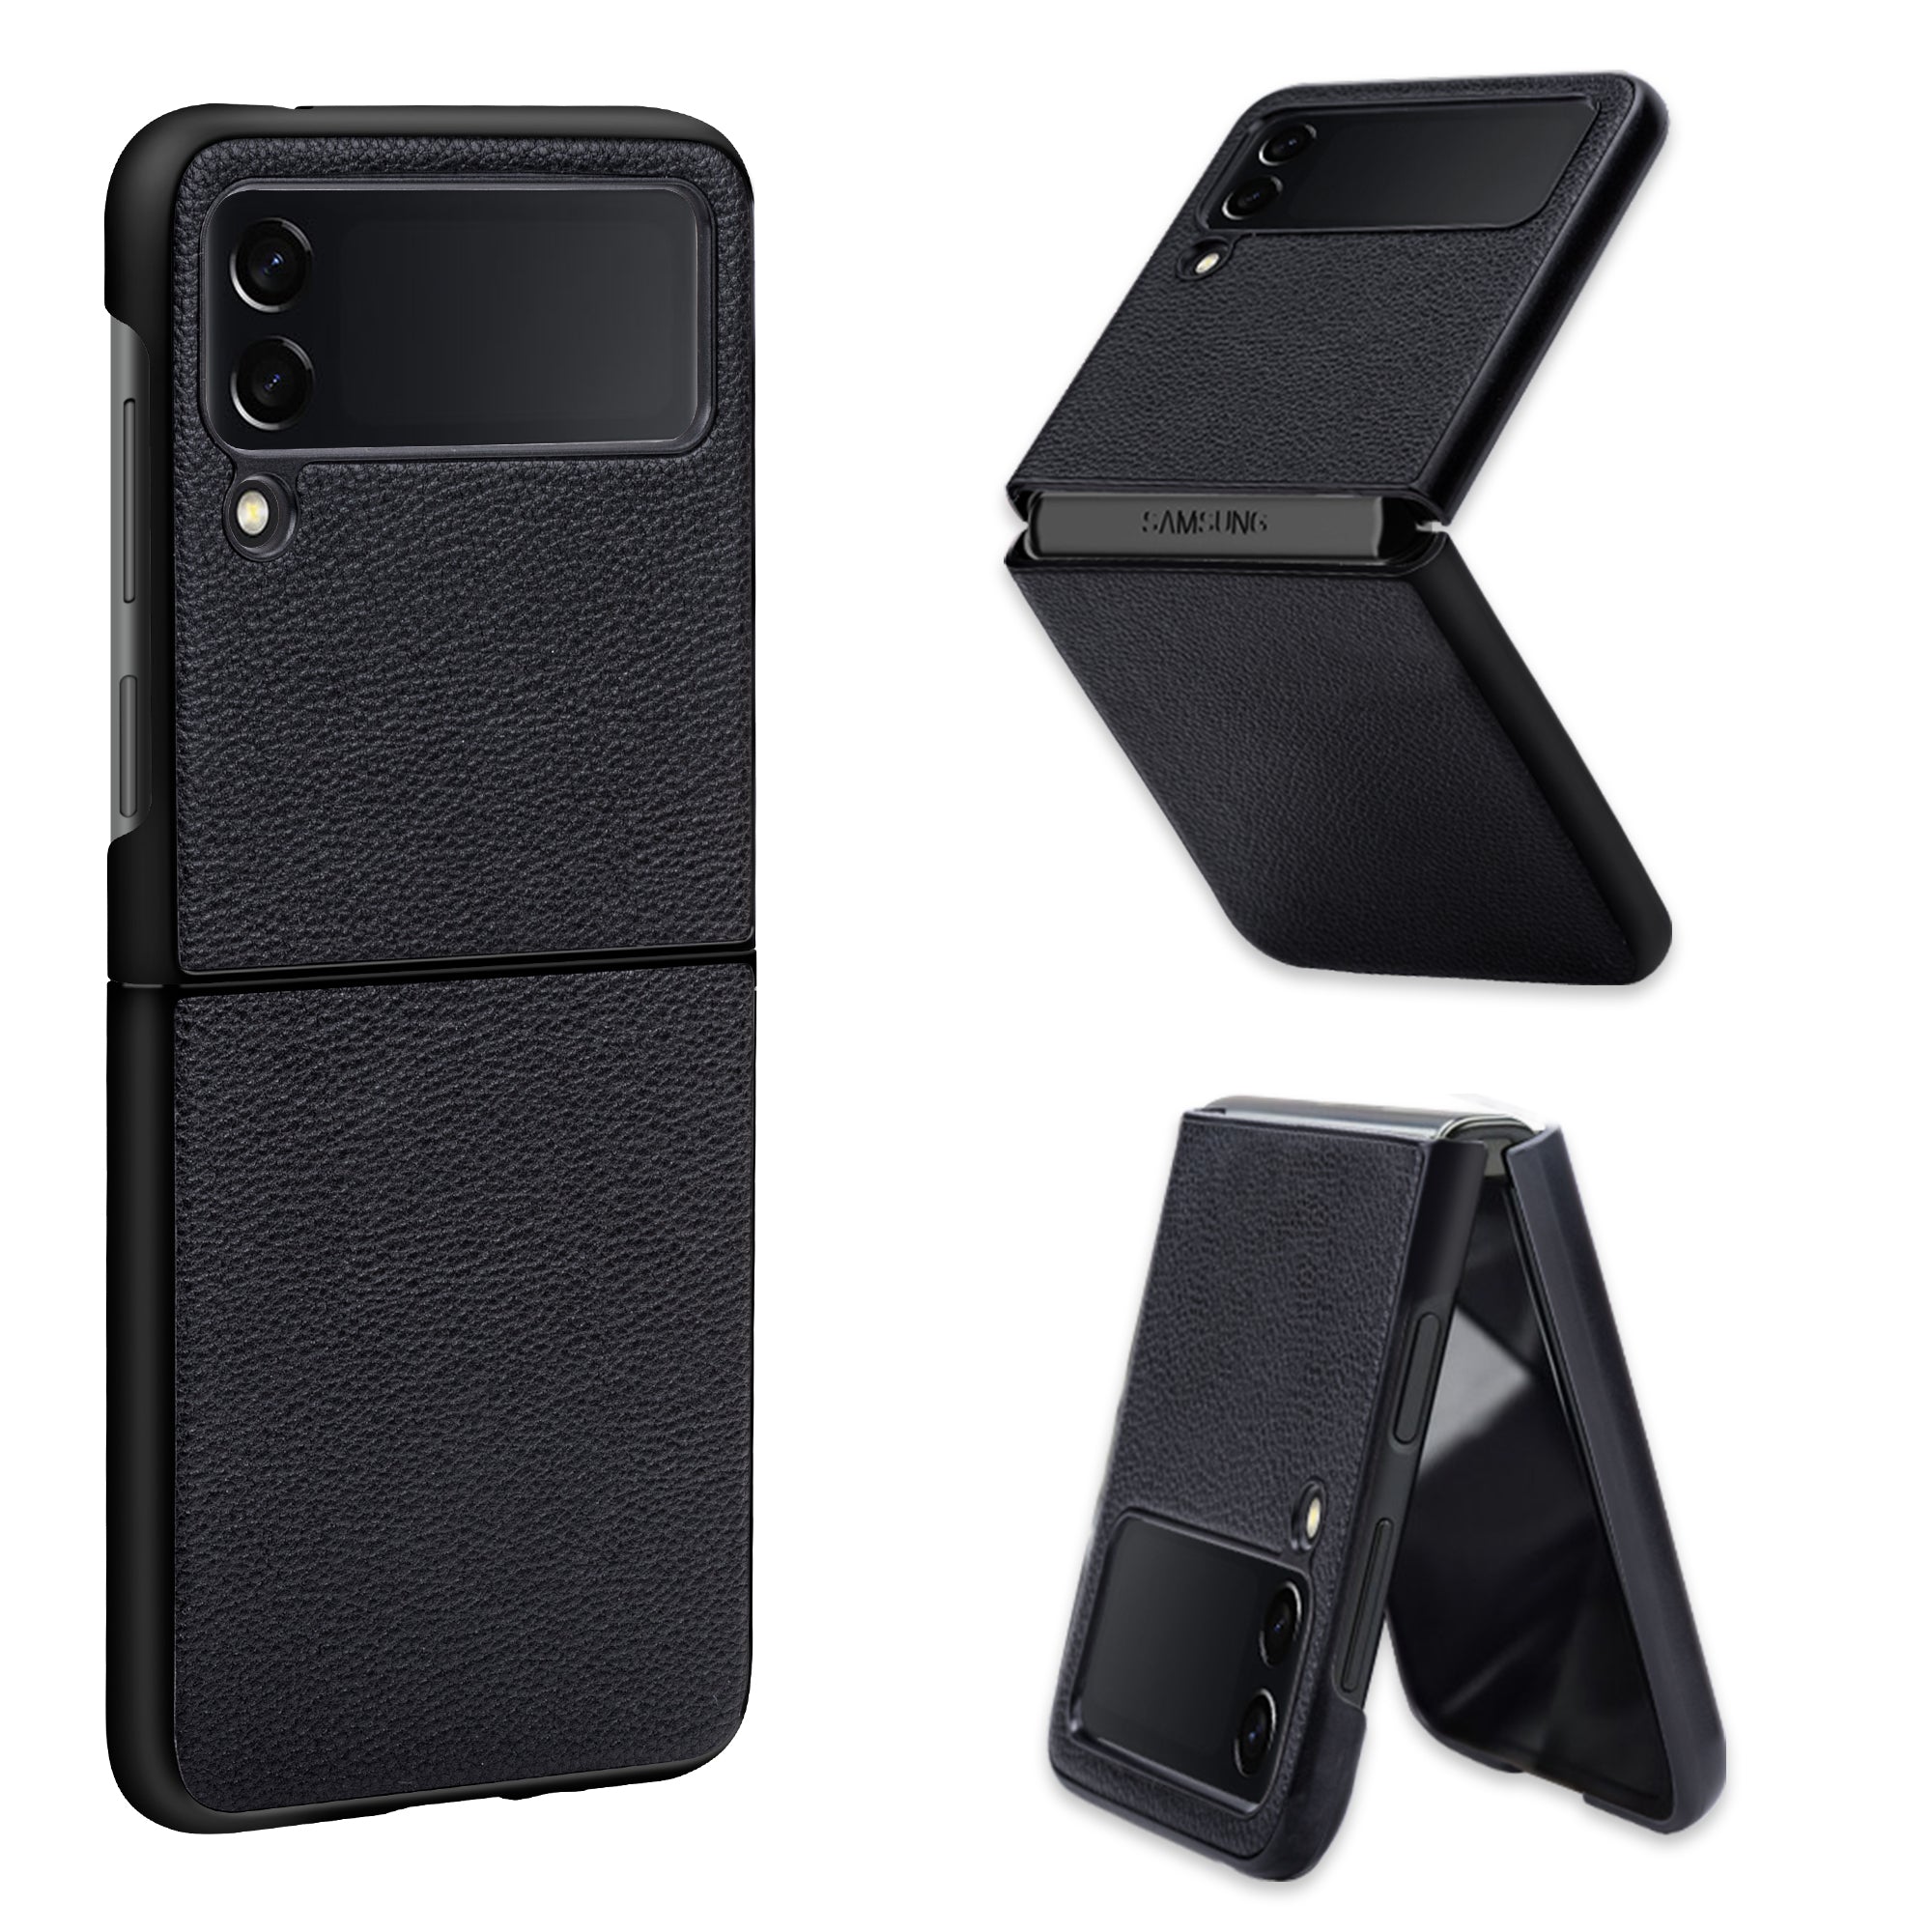 Arae Z Flip 3 Case, Samsung Galaxy Flip 3 Case, Ultra Slim Leather